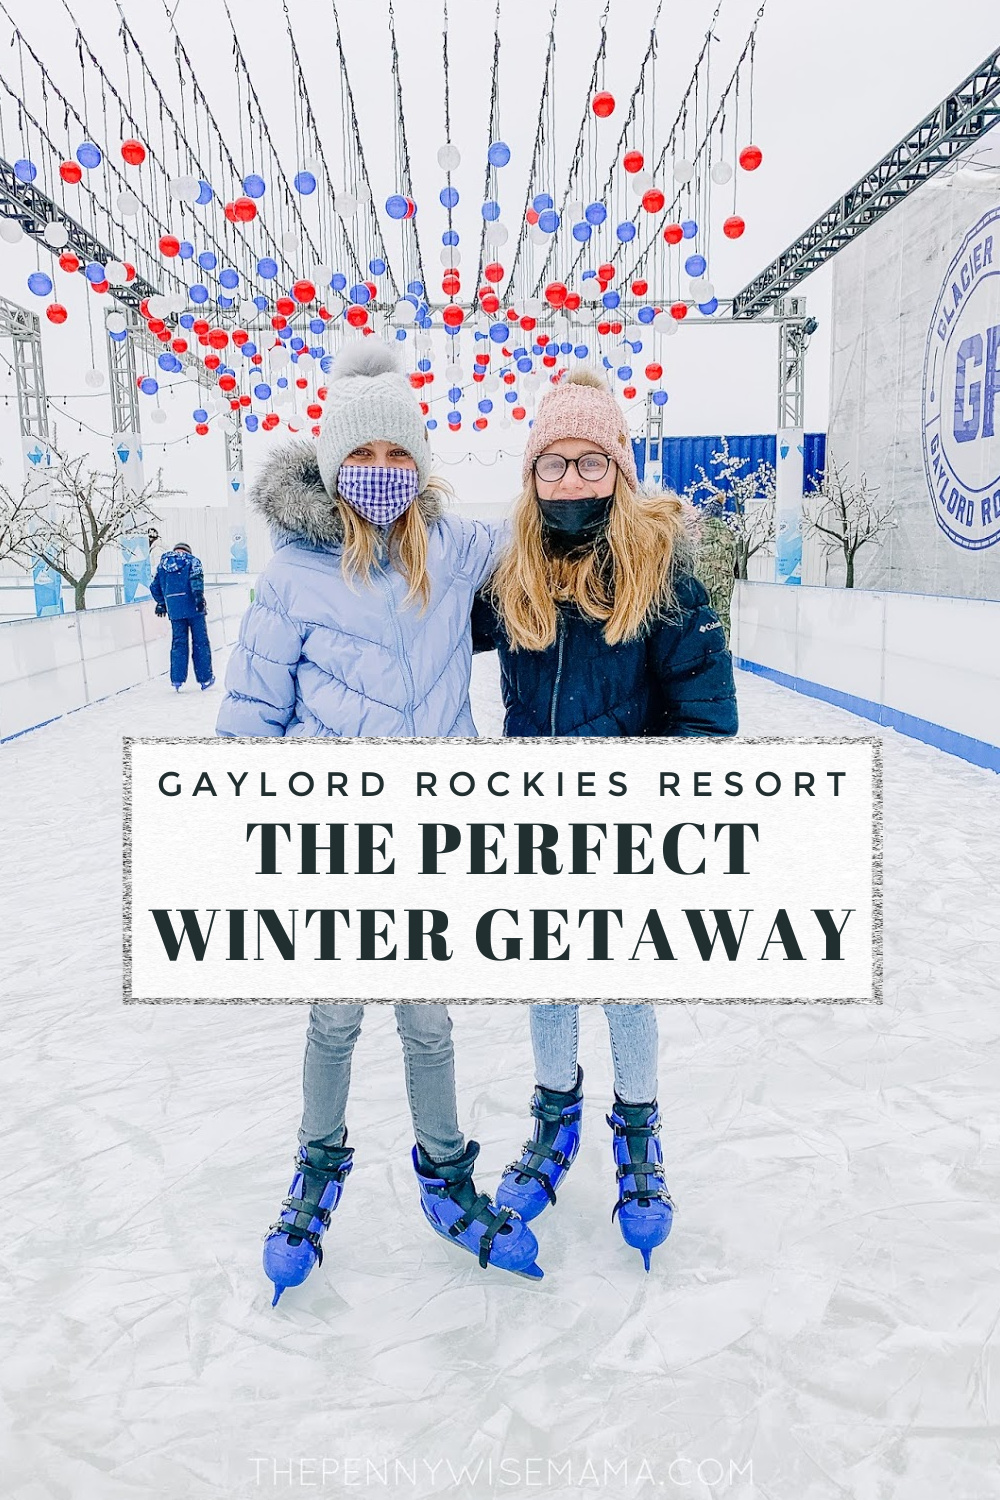 Plan a fun family getaway to Gaylord Rockies this winter! #GaylordRockies #vacation #staycation #familytravel #travel #luxuryresort